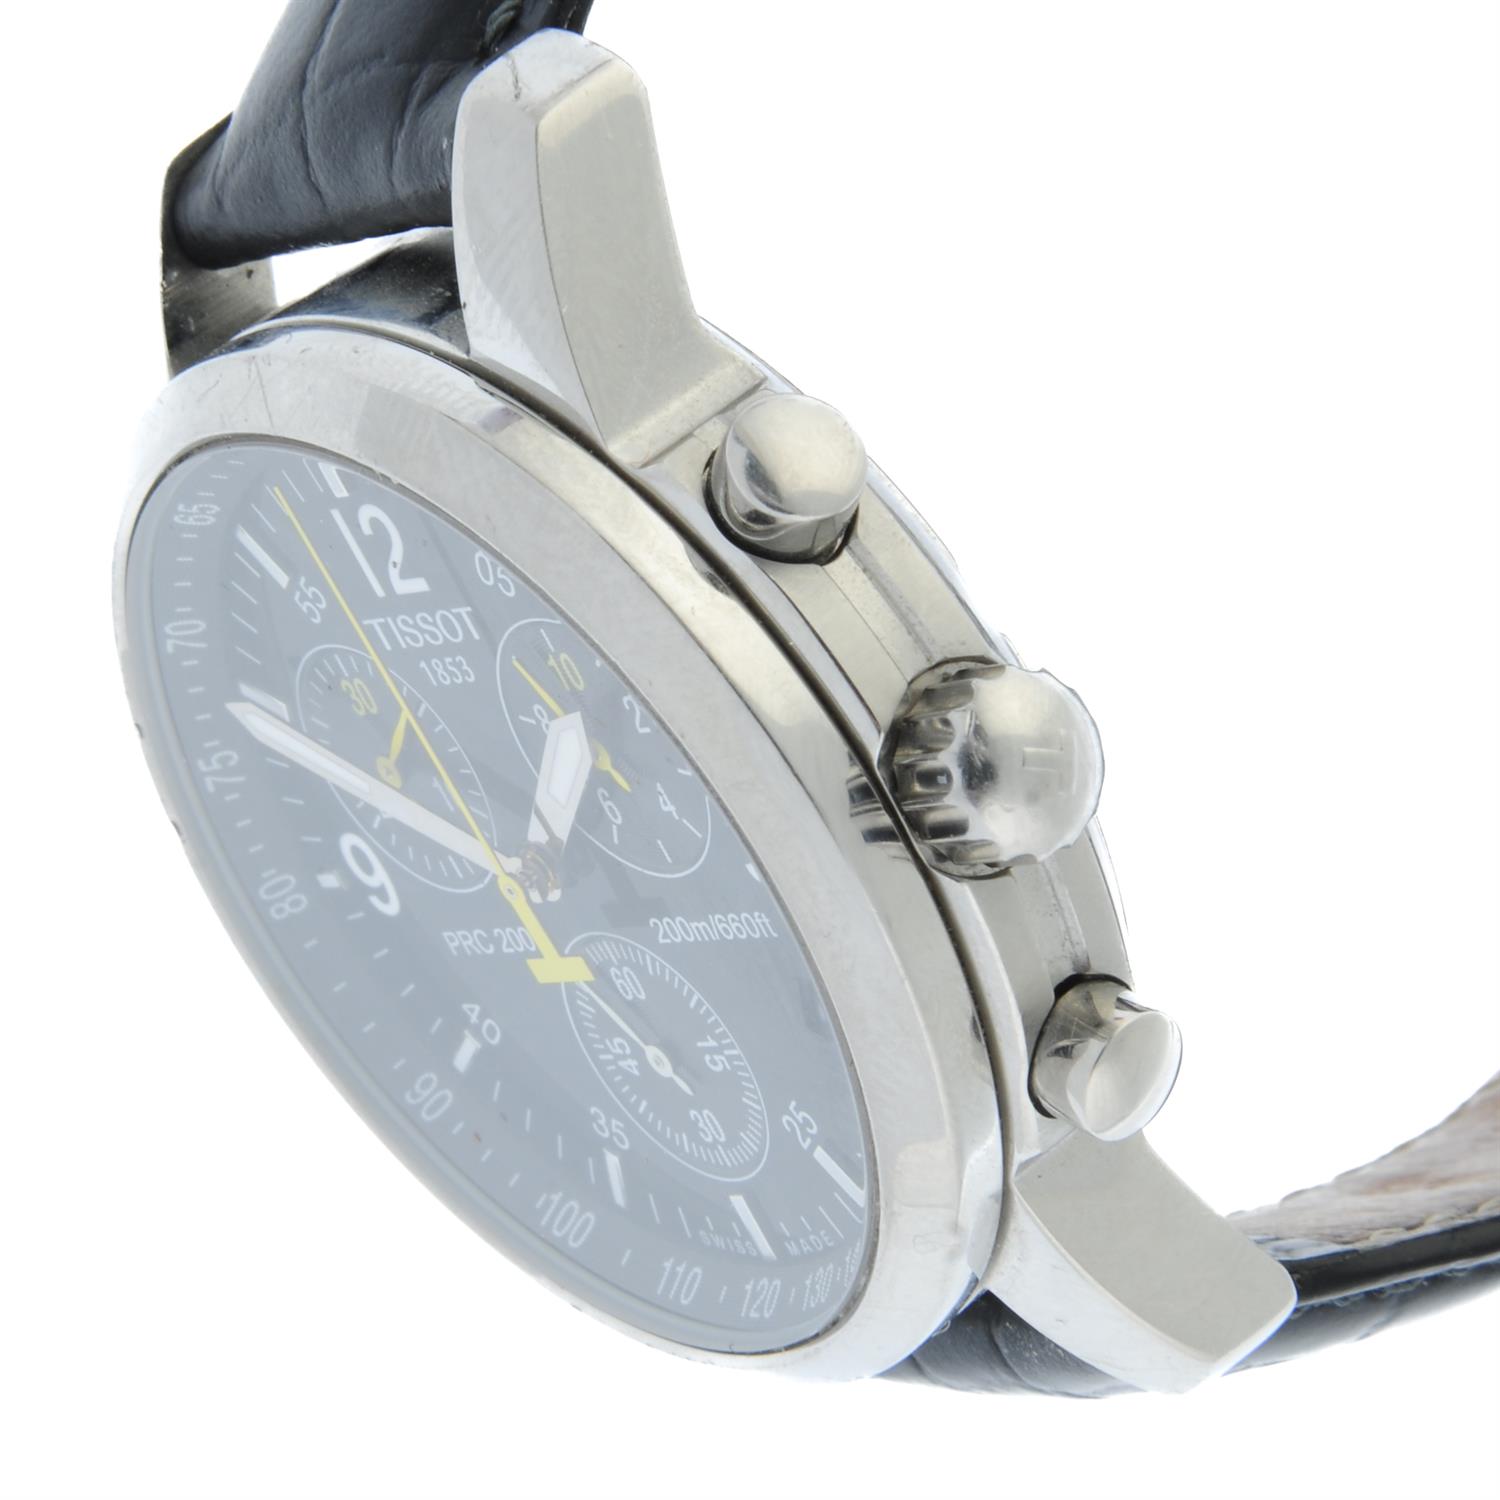 Tissot - a PRC 200 chronograph watch, 40mm. - Bild 3 aus 4